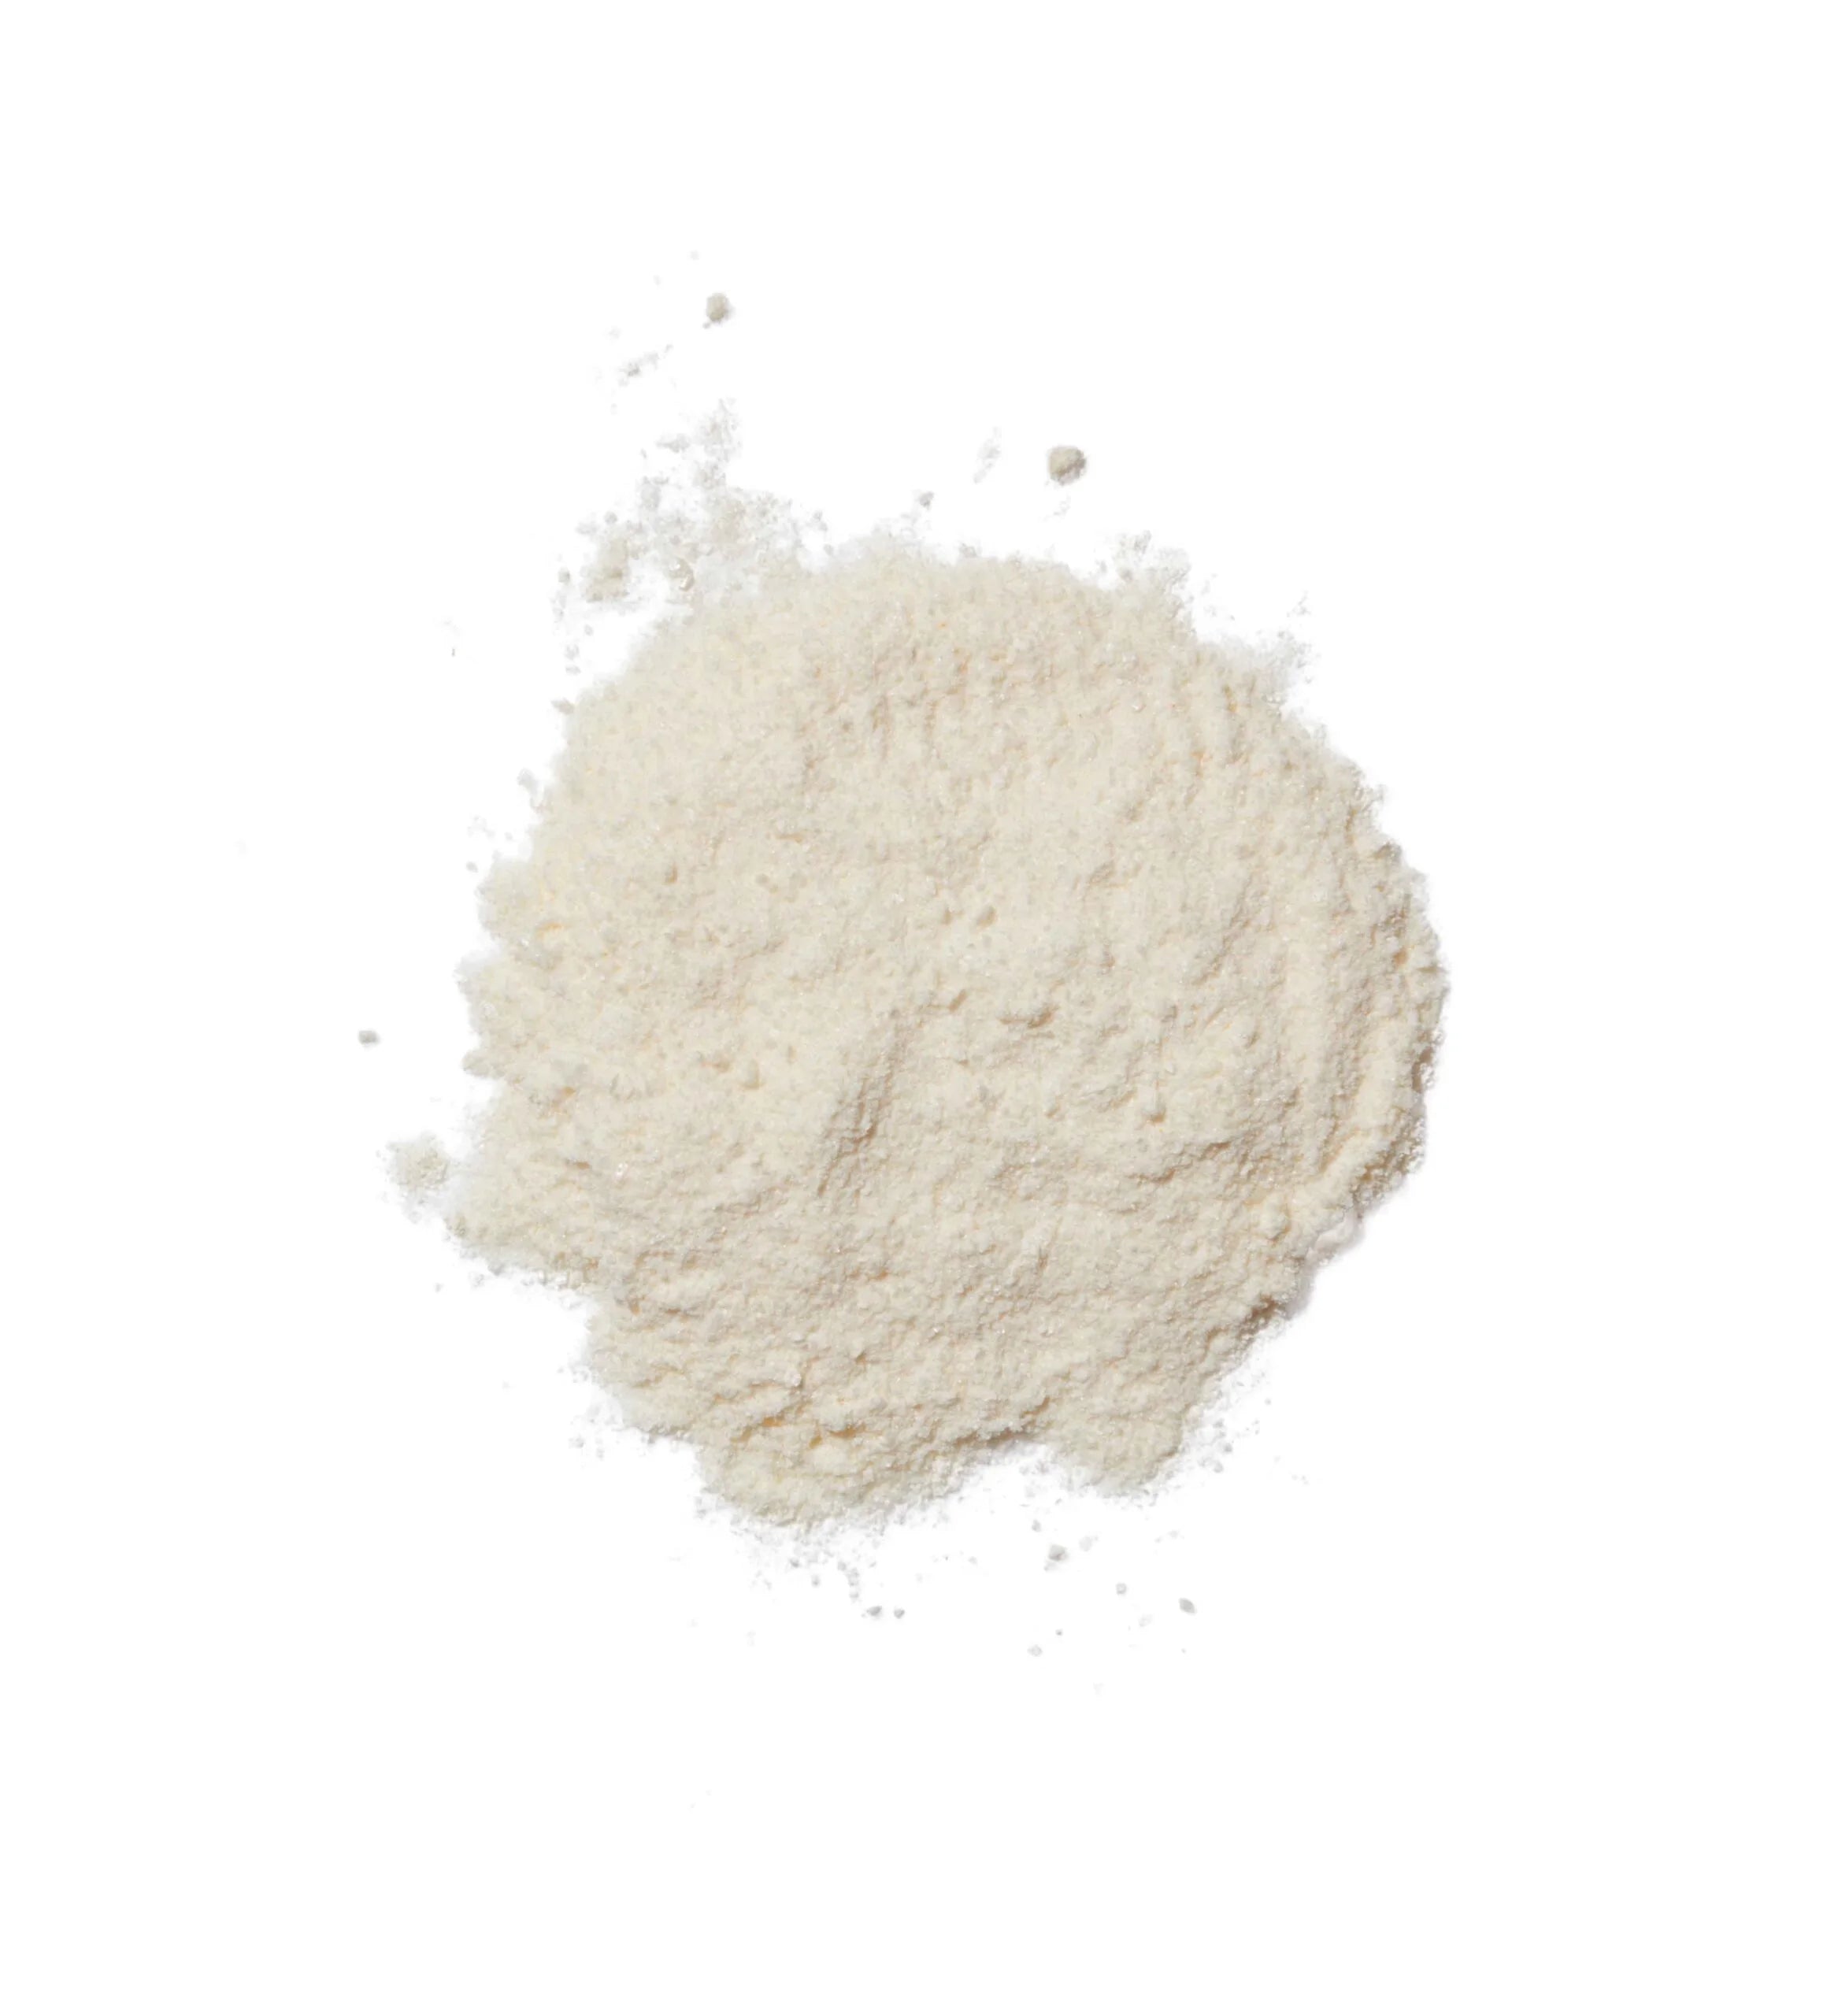 MicroPolish Powder exfoliant texture